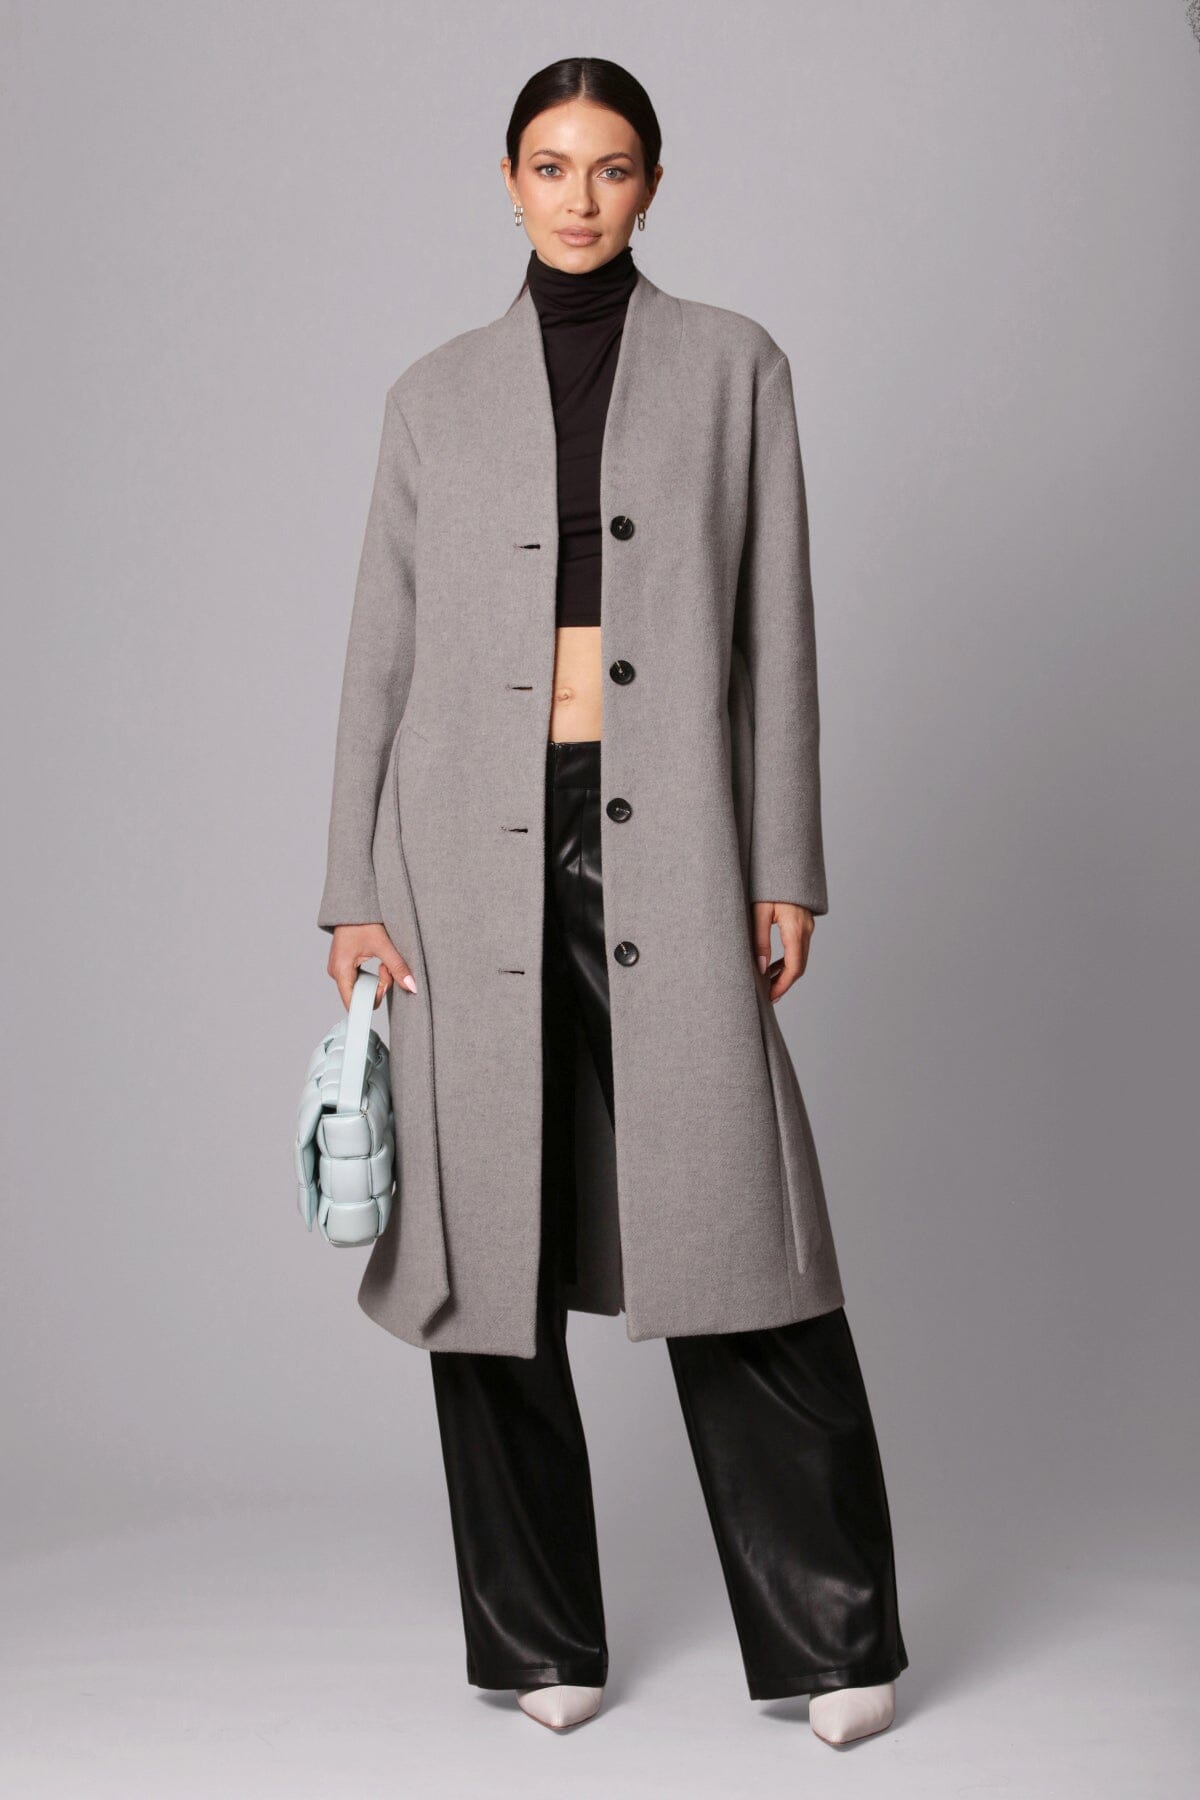 Women's wool blend tailored long dressy coat Avec Les Filles